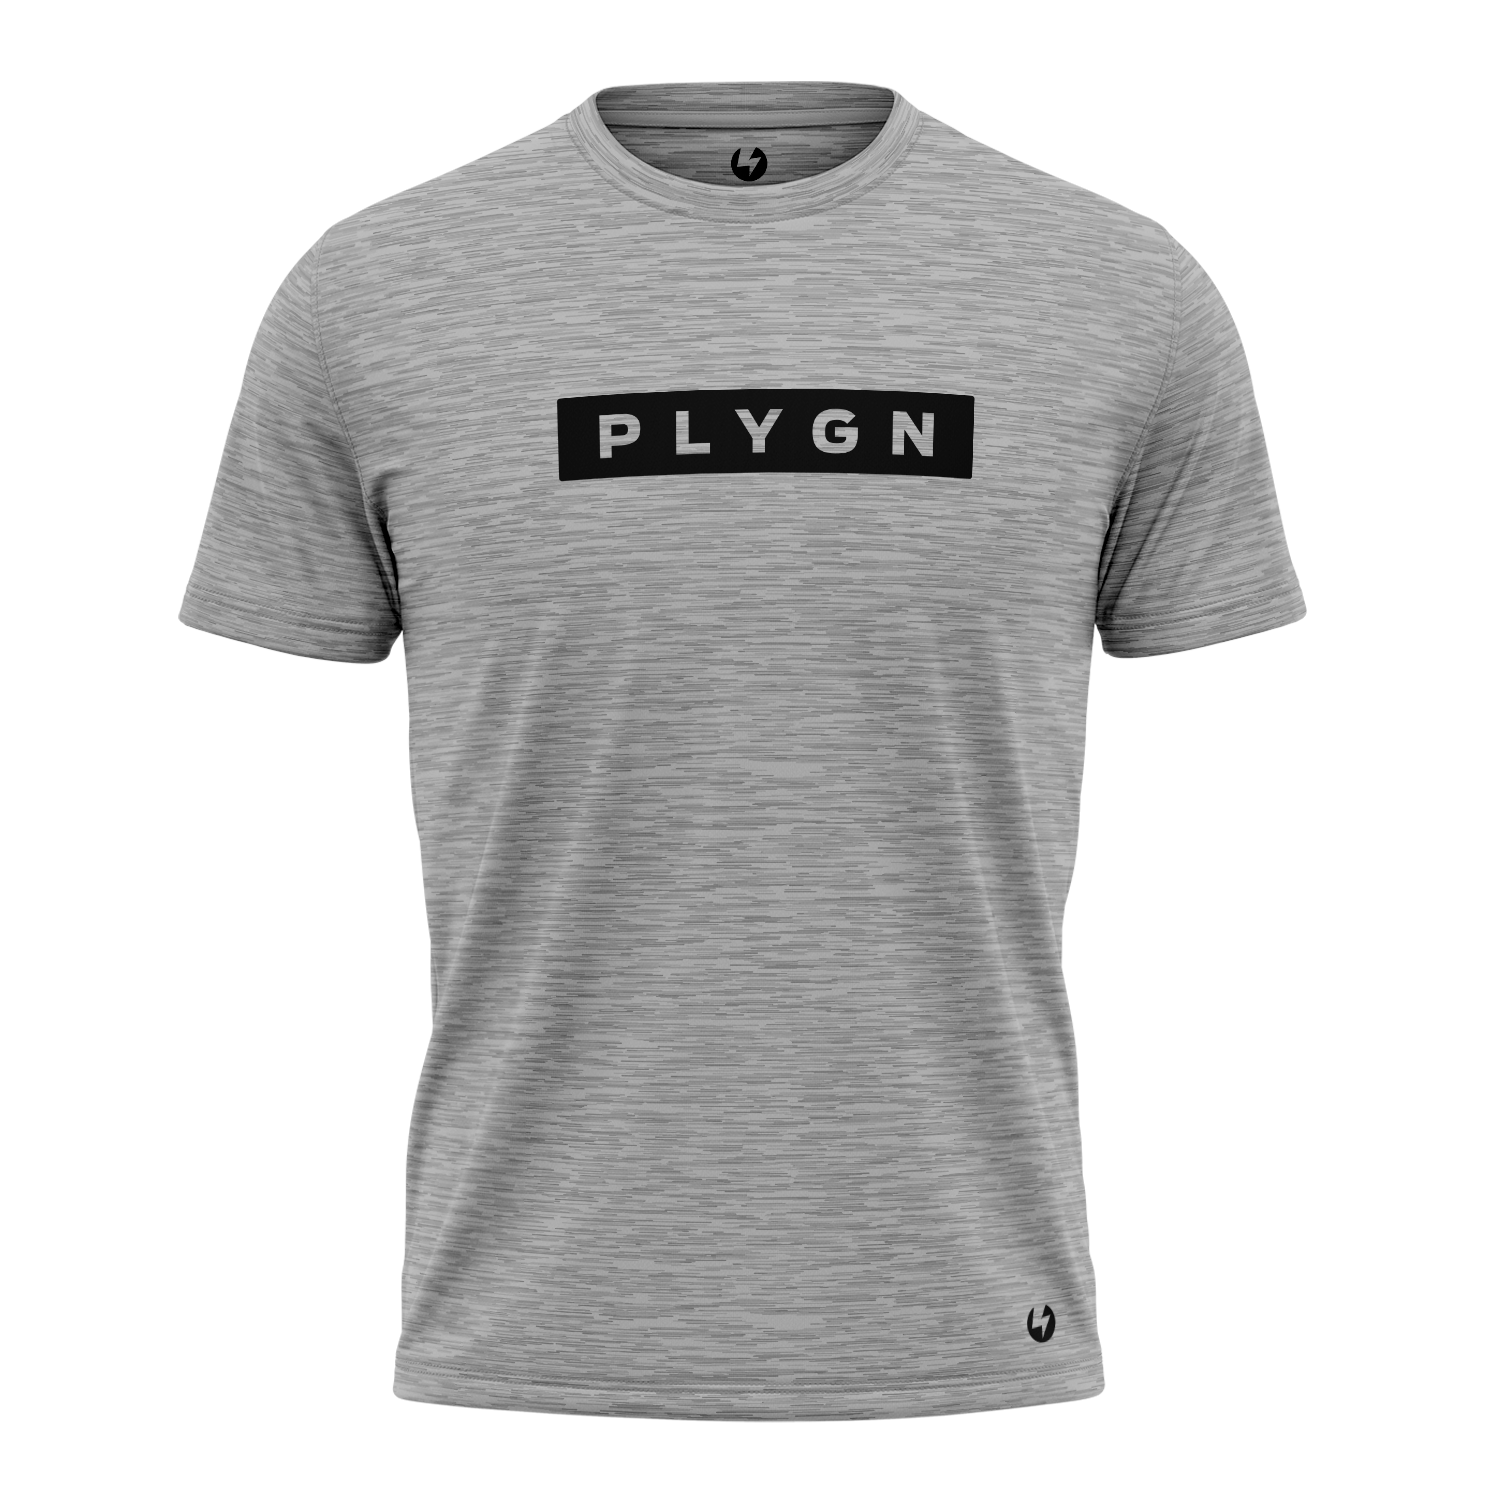 Cotton T-Shirt "Block Type"